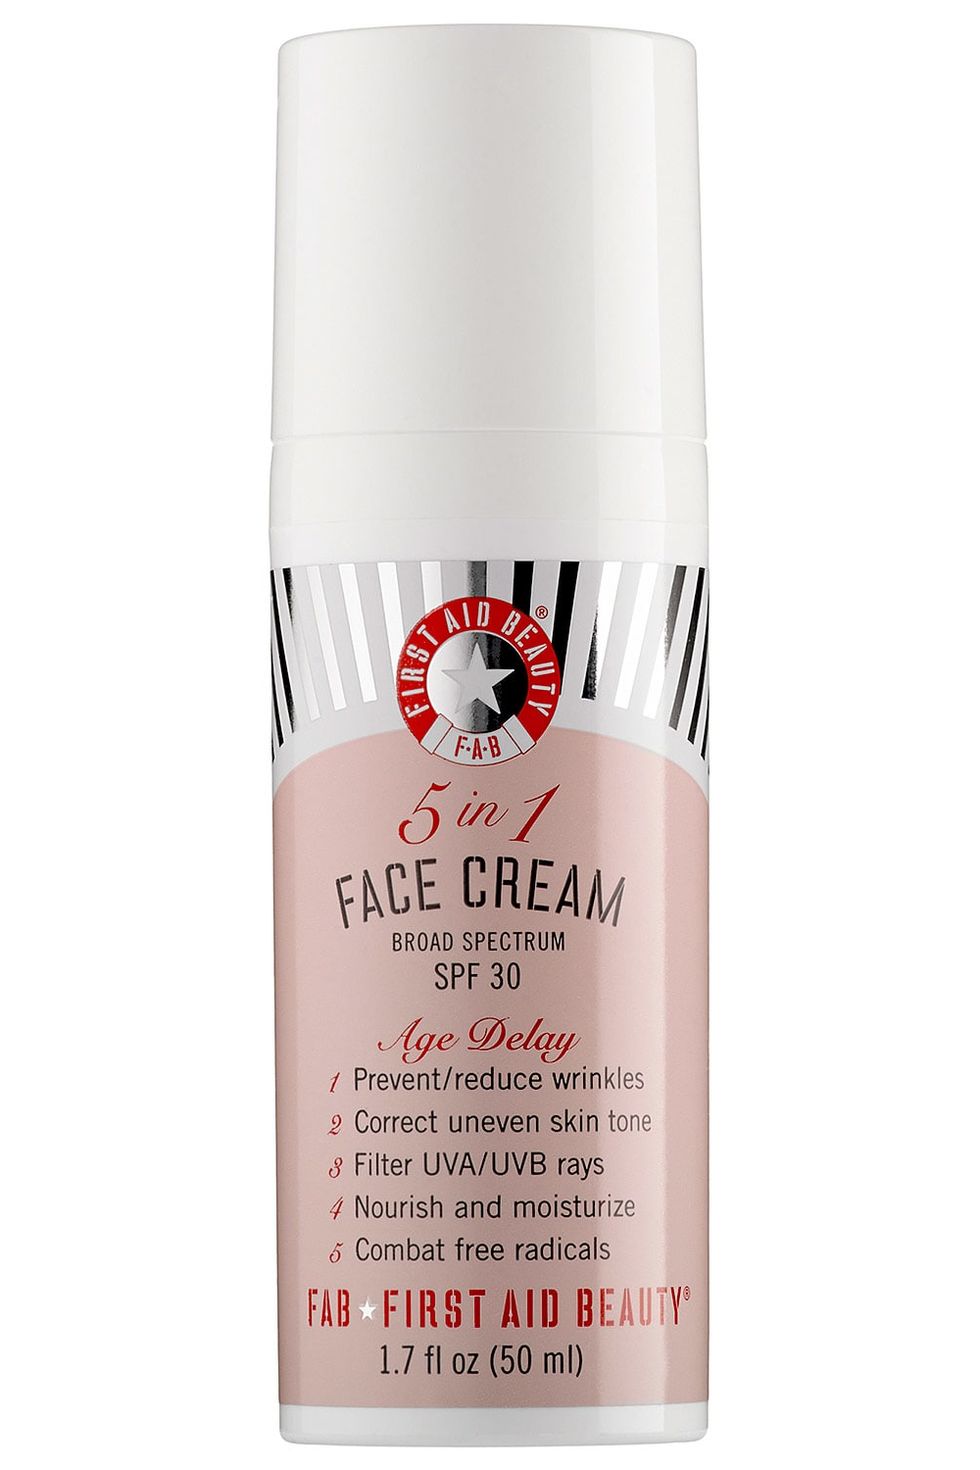 5 in 1 Face Cream SPF 30